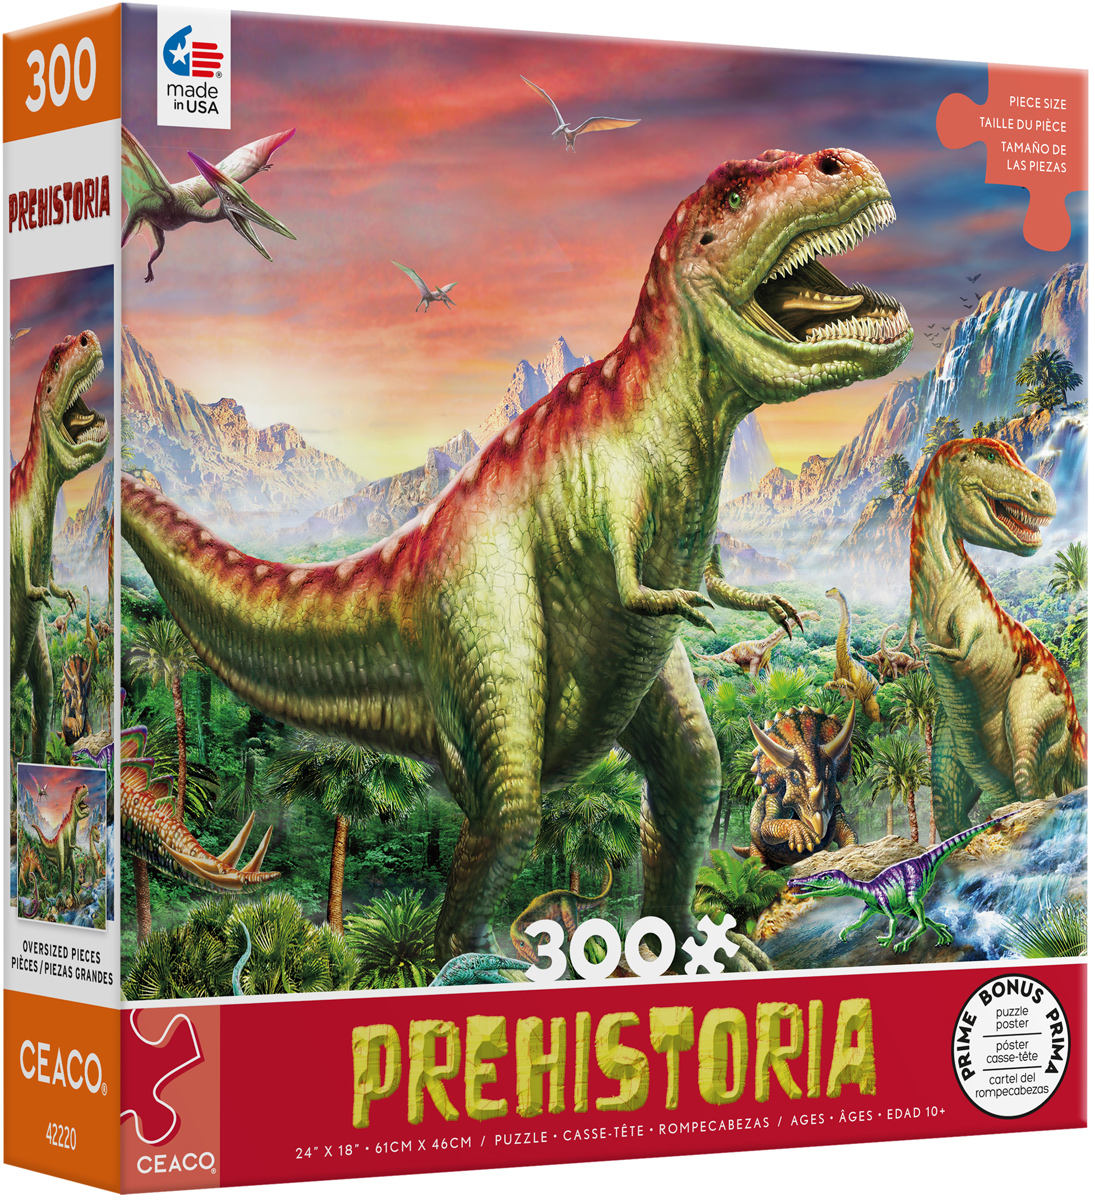 Prehistoria - Jurassic Forest